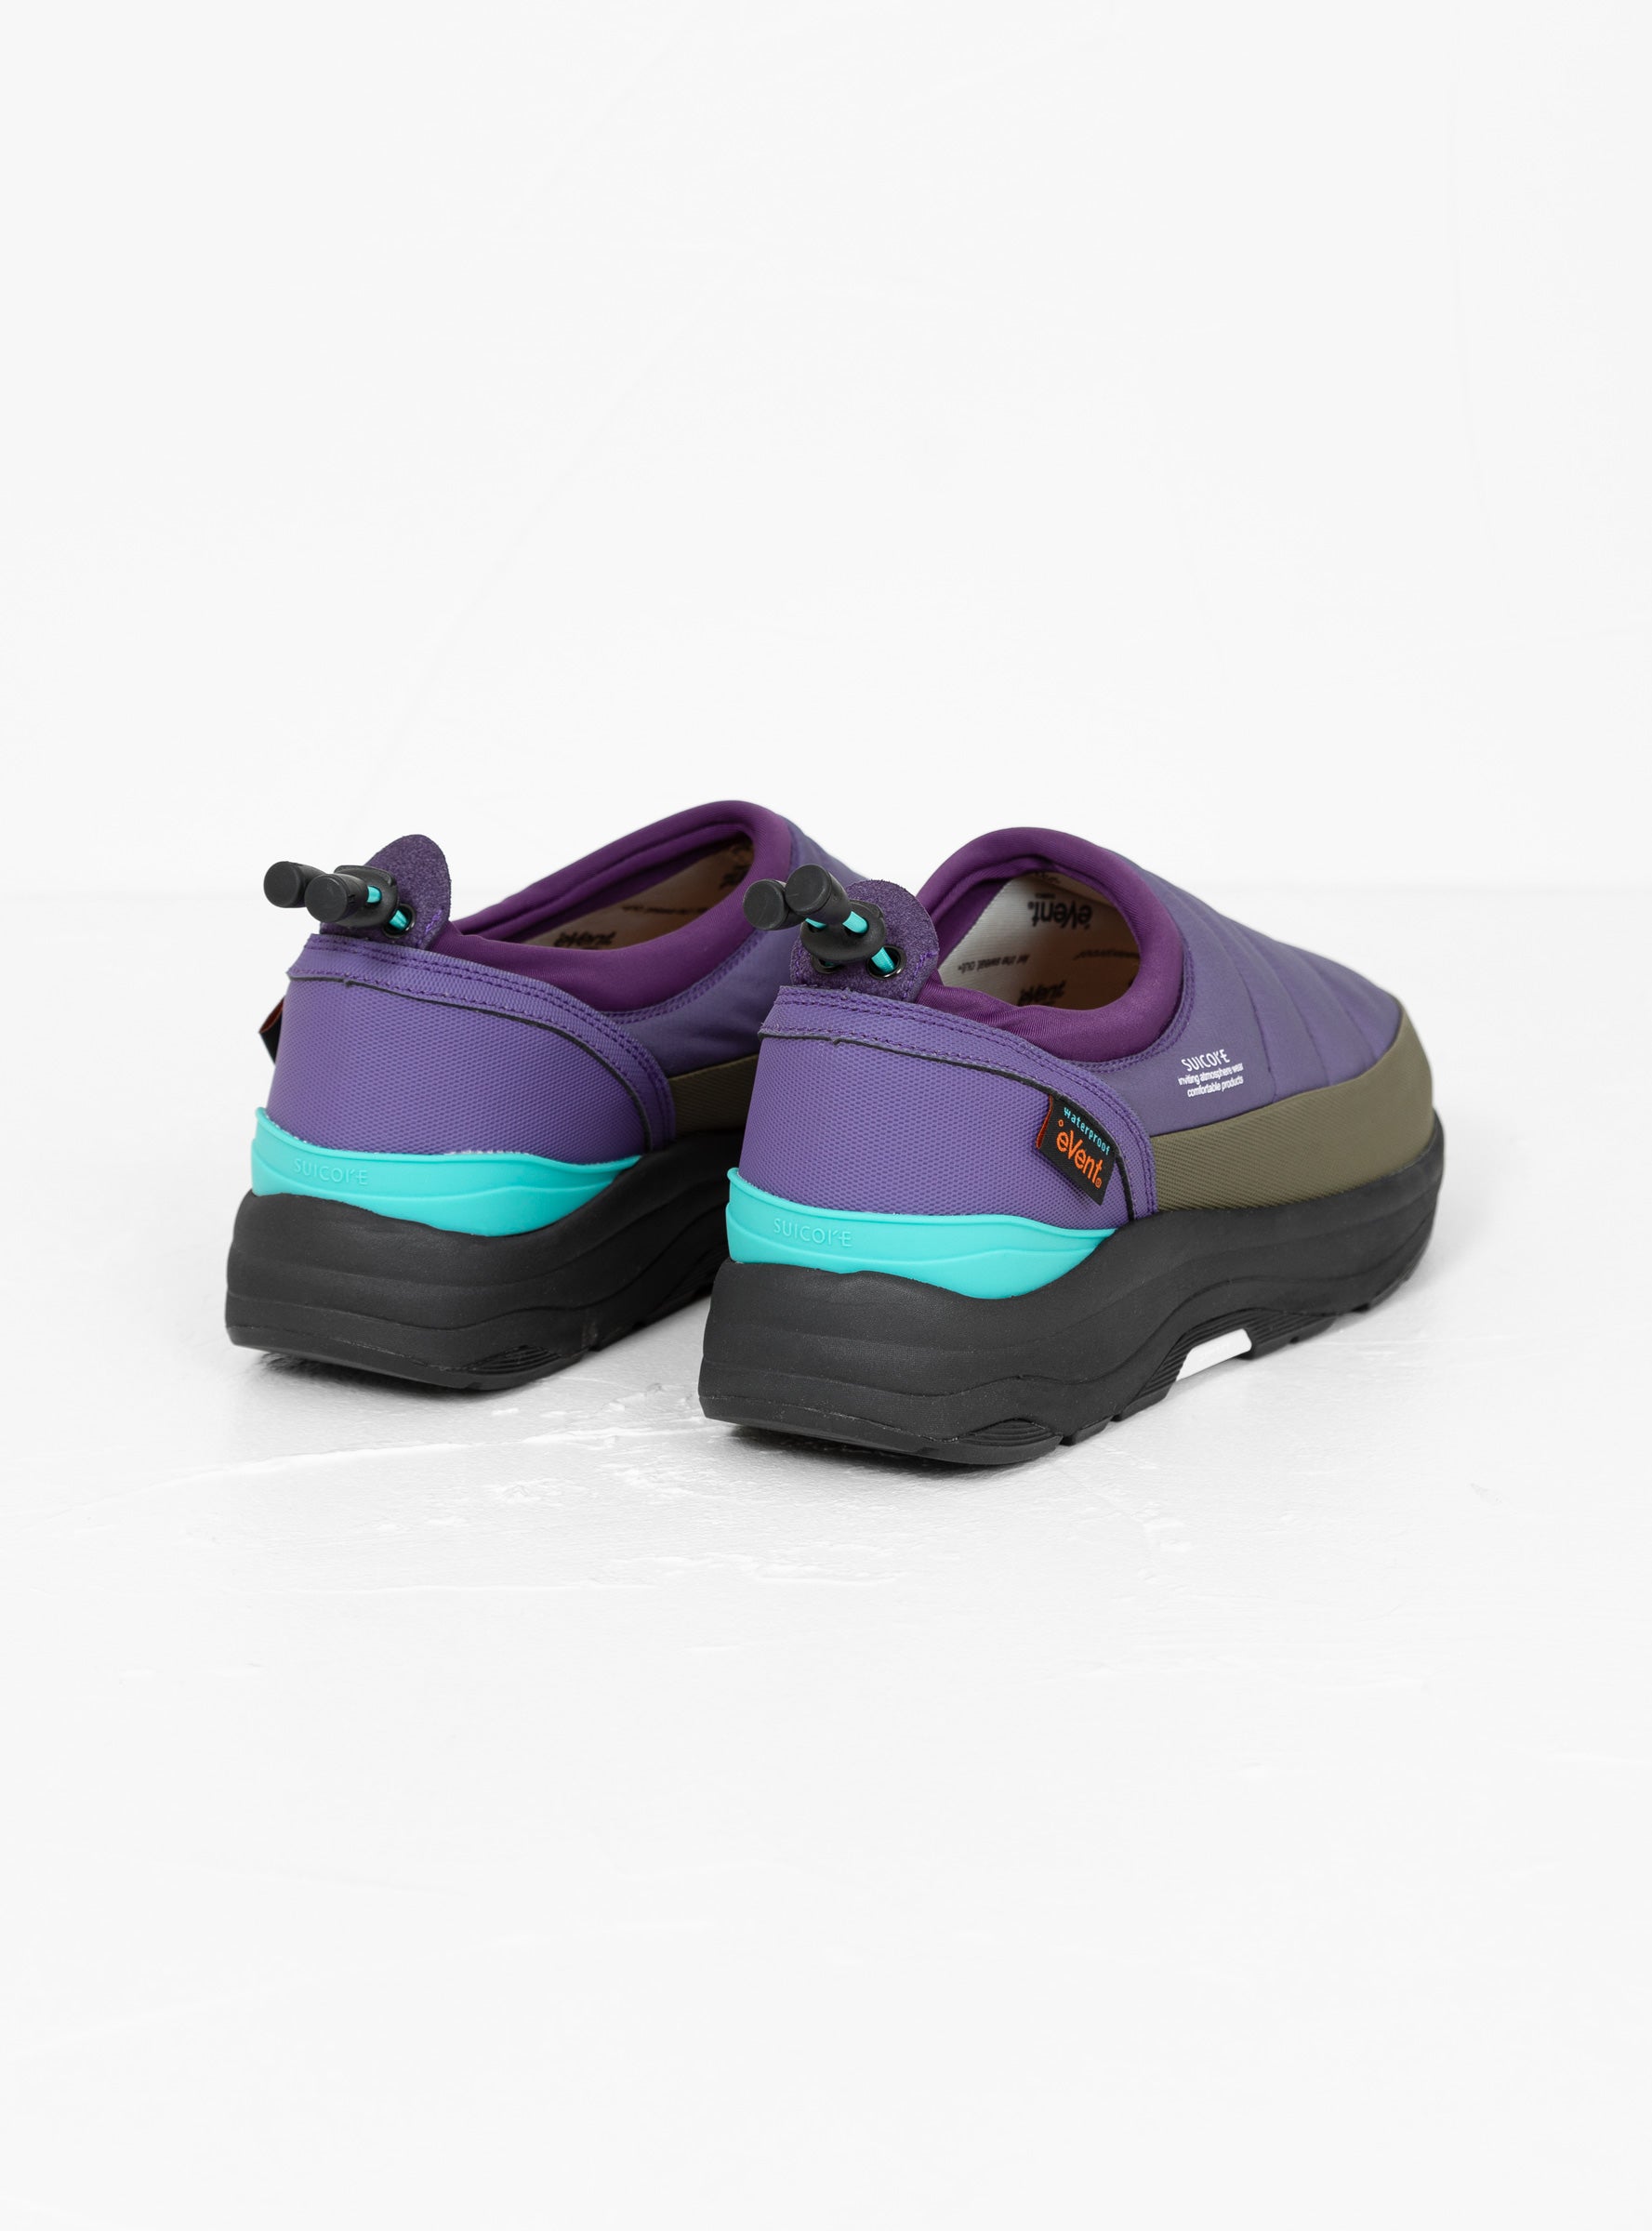 Suicoke Suicoke Pepper Modev Shoes Purple & Black - Size: UK 9